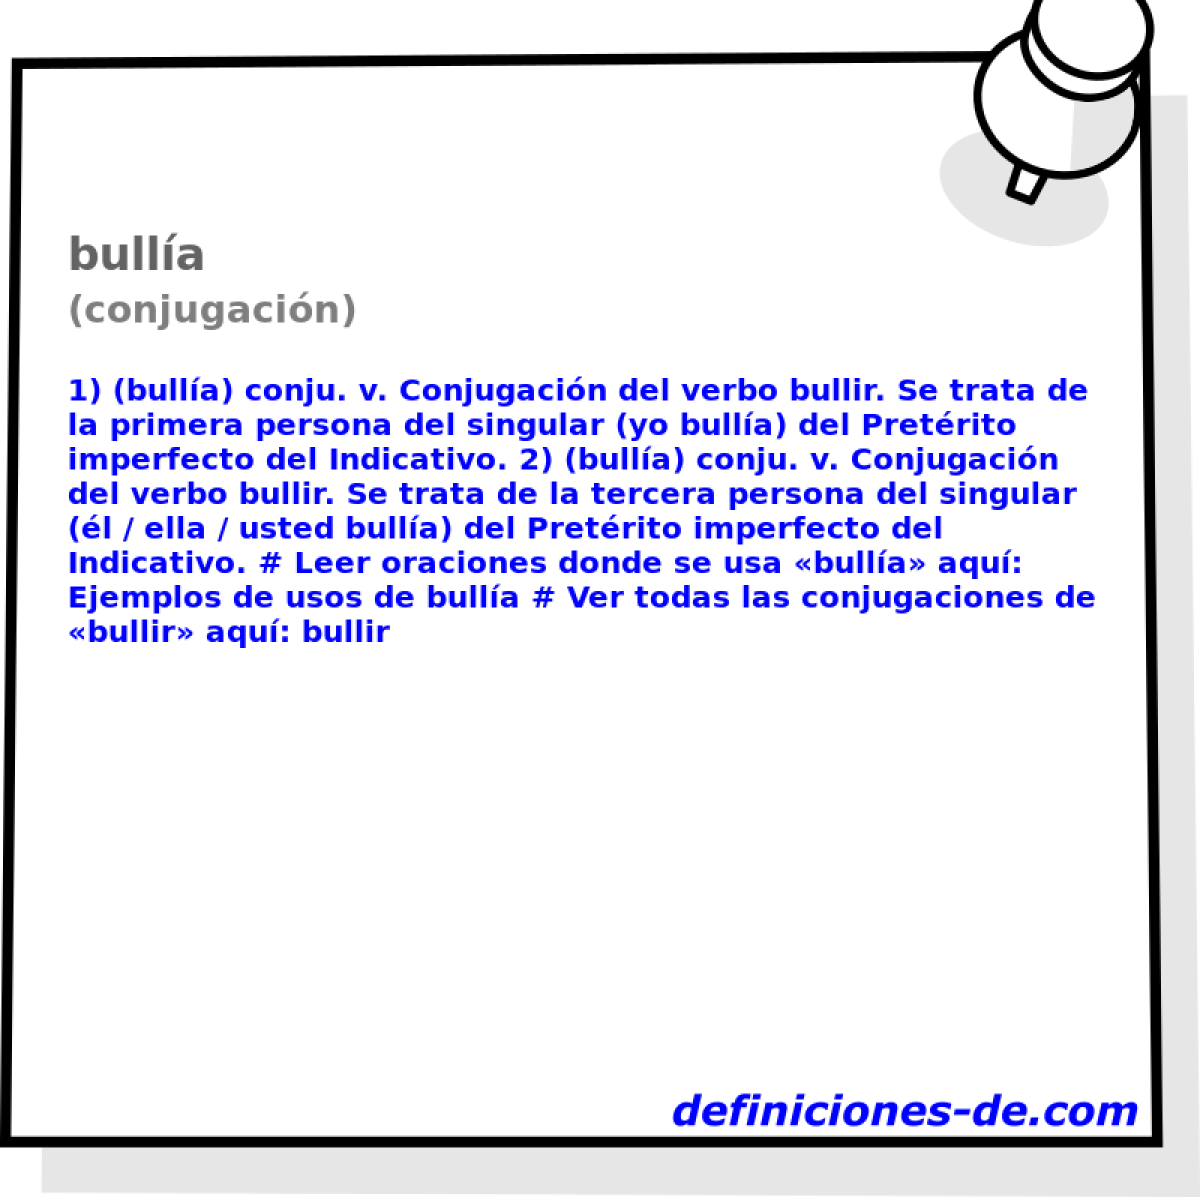 bulla (conjugacin)